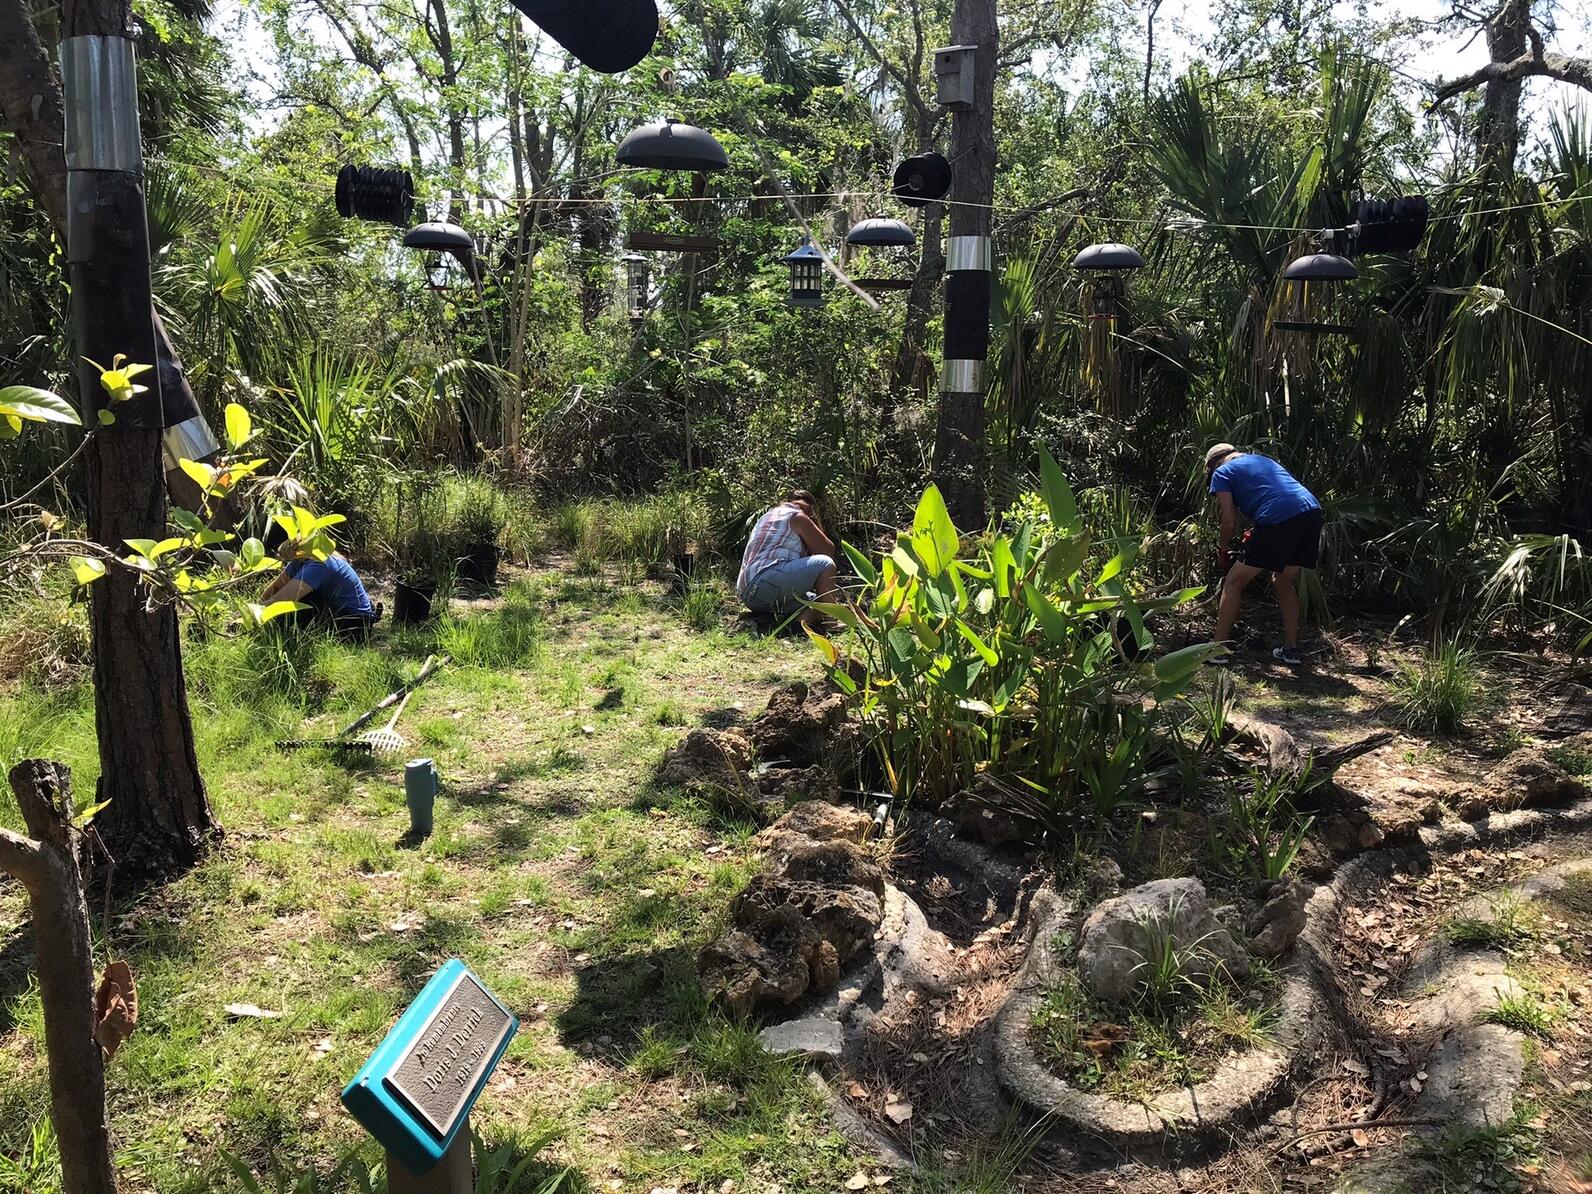 People work on plants surrounding a group of bird feeders.